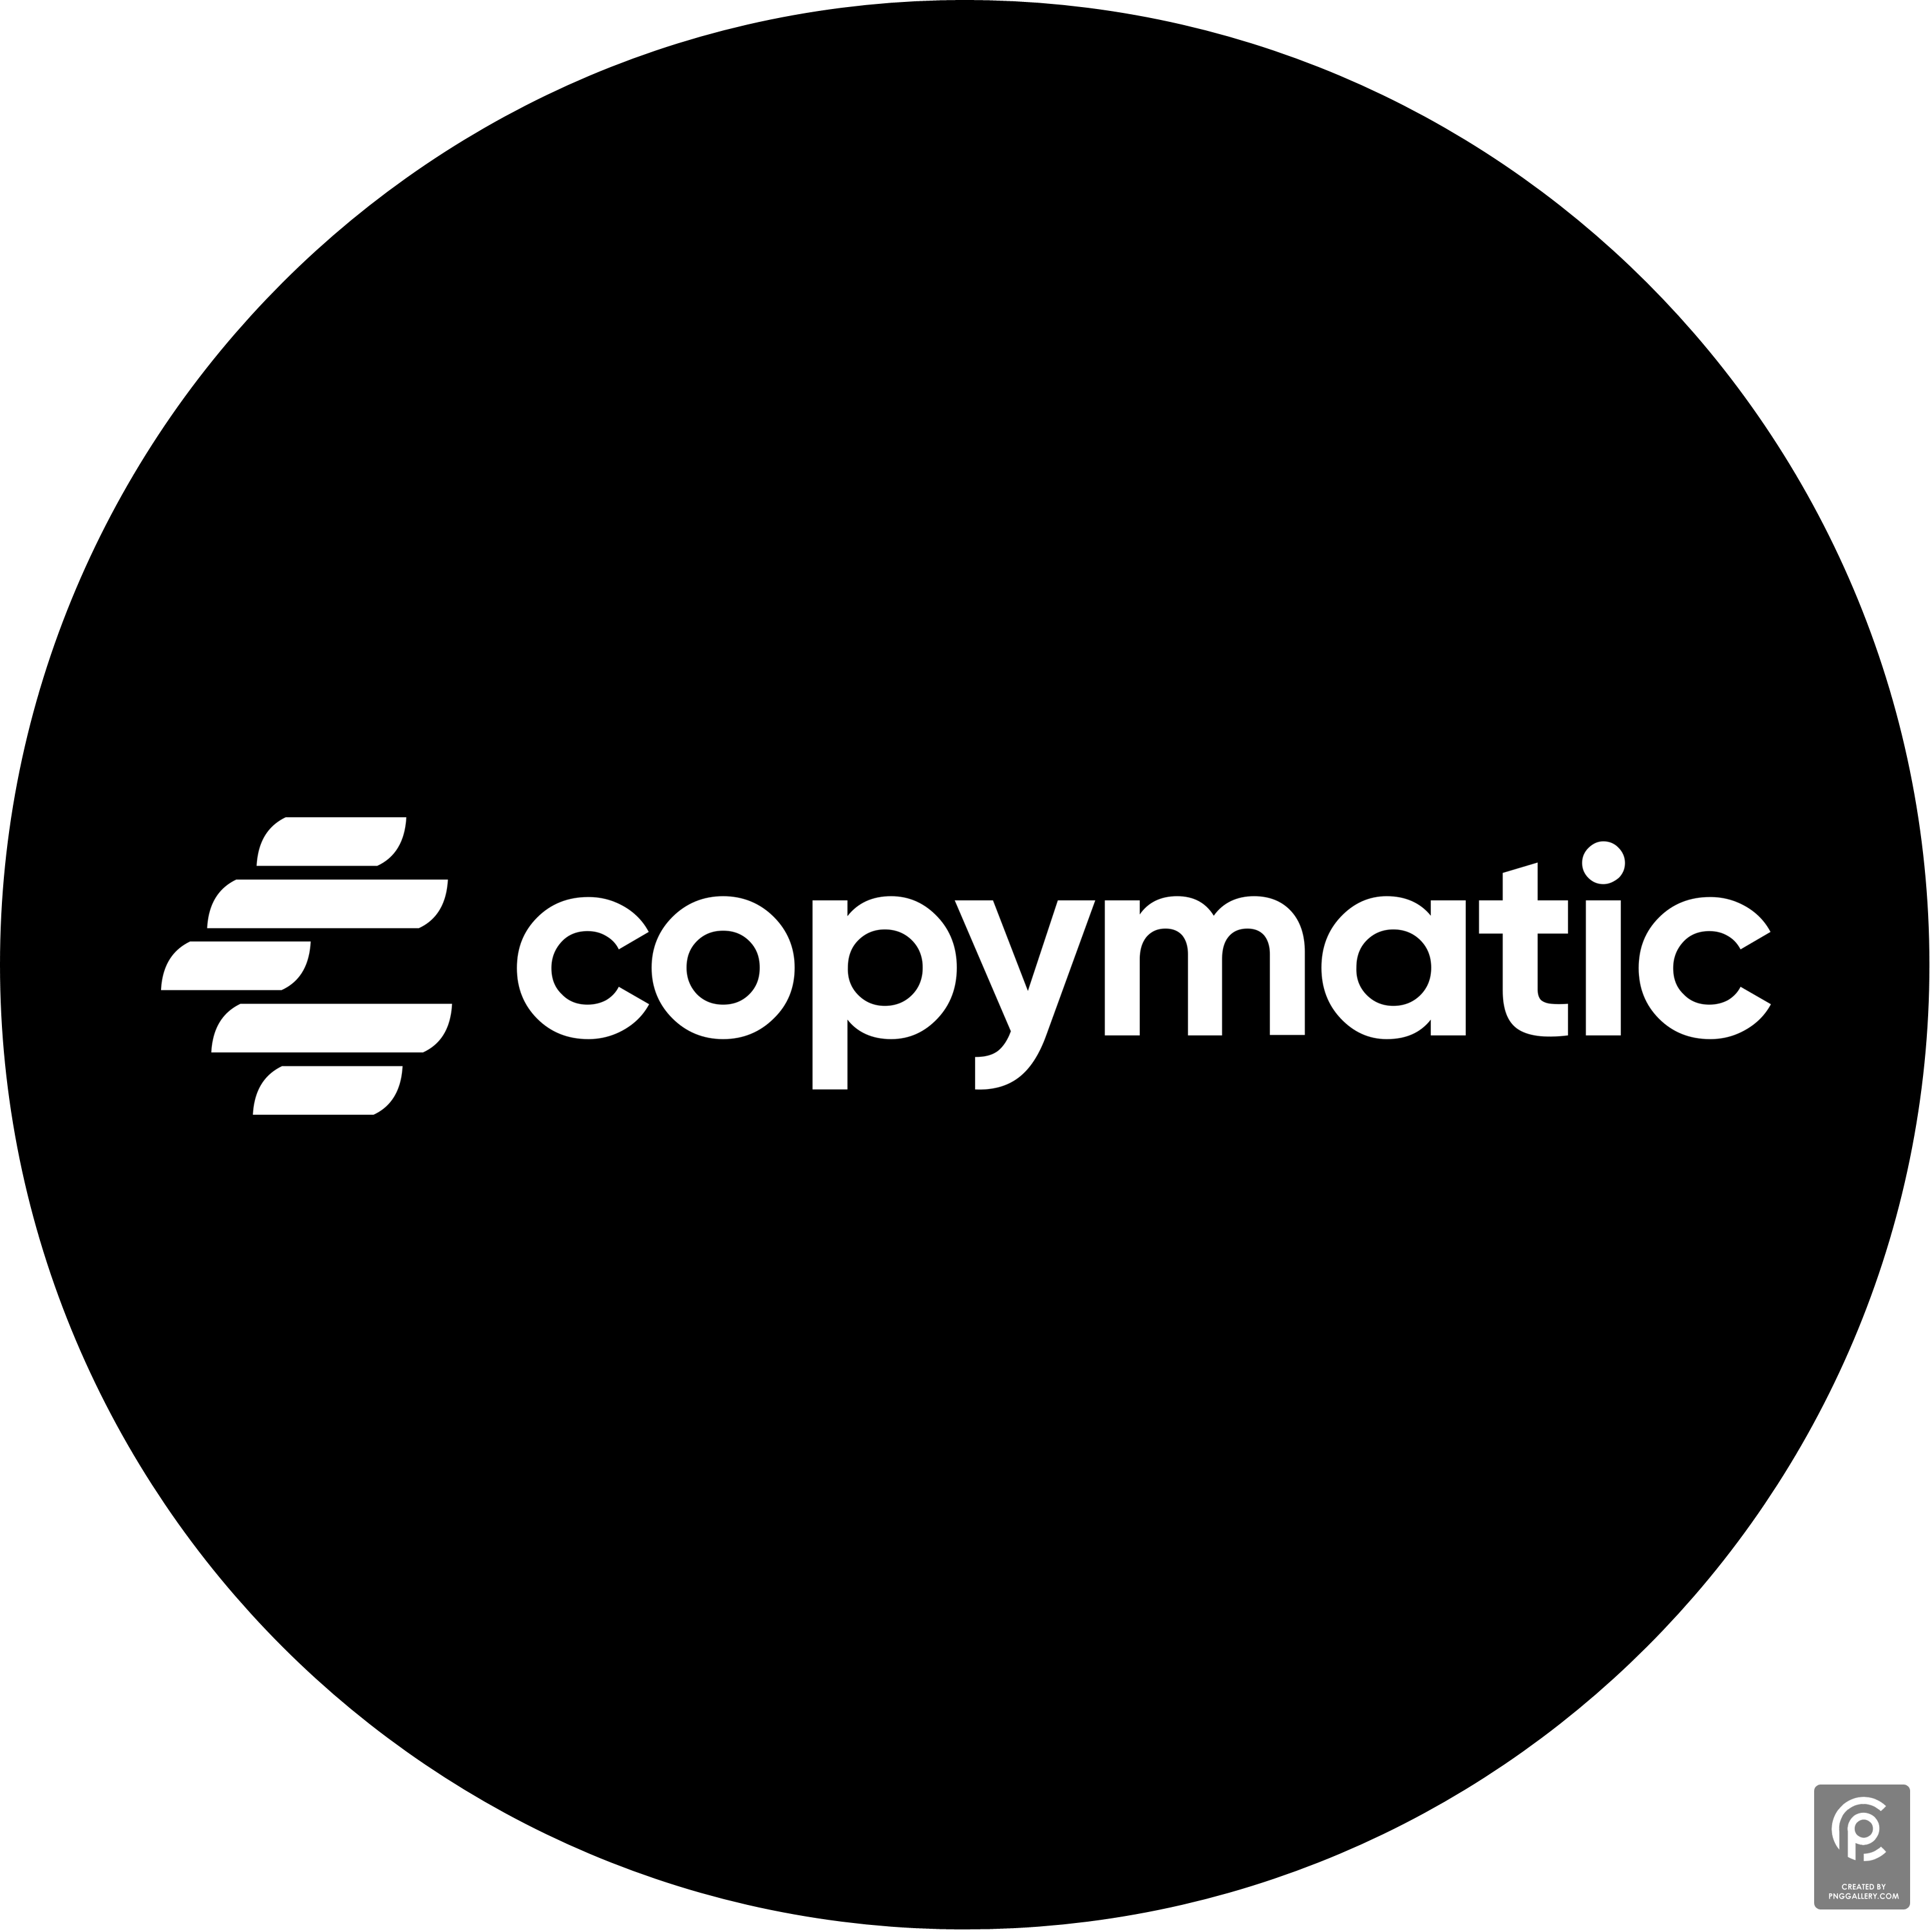 Copymatic Logo Transparent Clipart